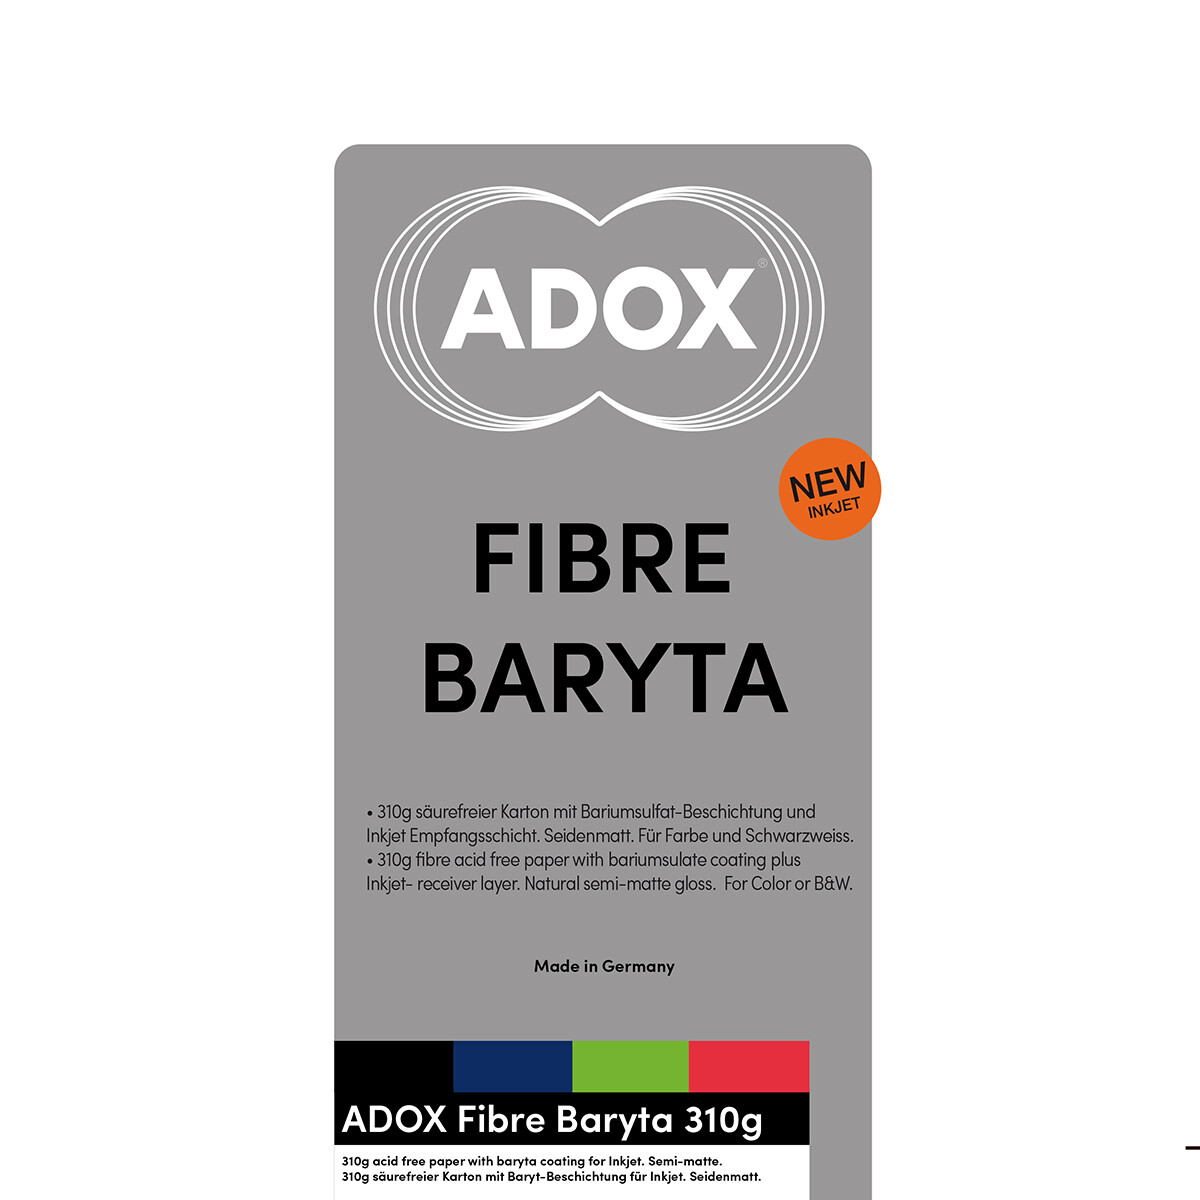 ADOX FIBRE BARYTA SILK (310g) DIN A4 21x29,7 CM (8,26x11,69 INCH) / 25 Blatt